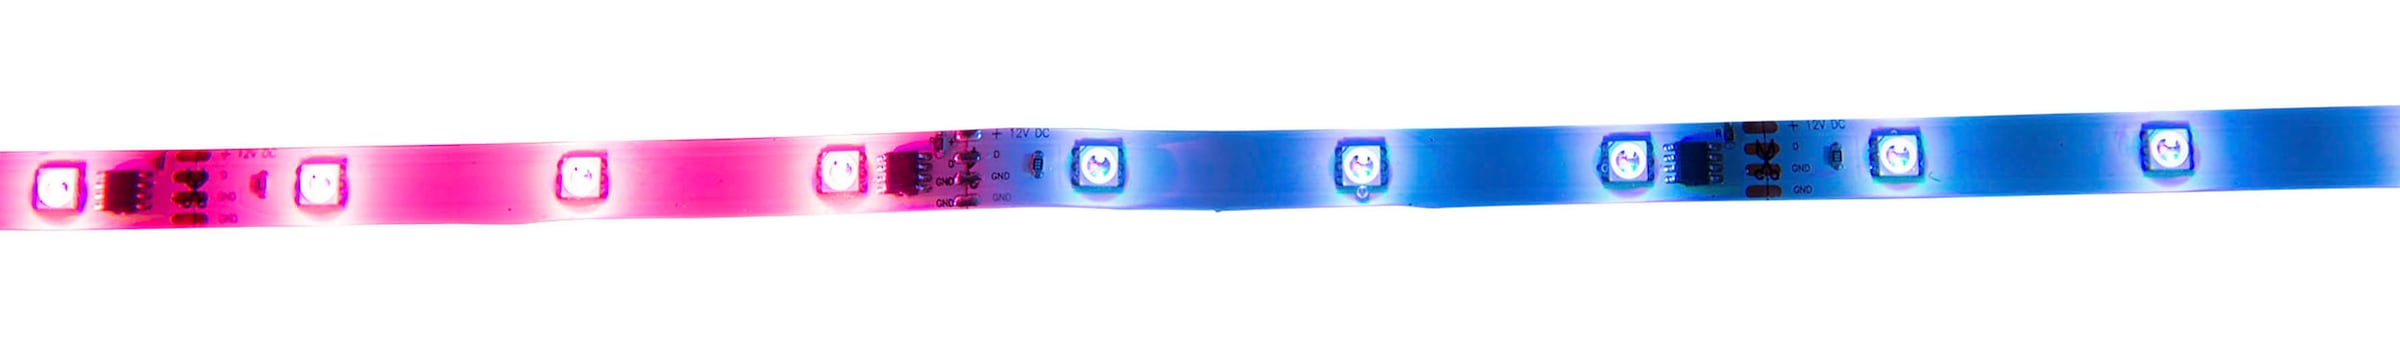 näve LED-Streifen »Stripe«, 1 St.-flammig, LED Stripe RGB, 5m, Infrarot-Fernbedienung, IP20, Dimmbar, 19W